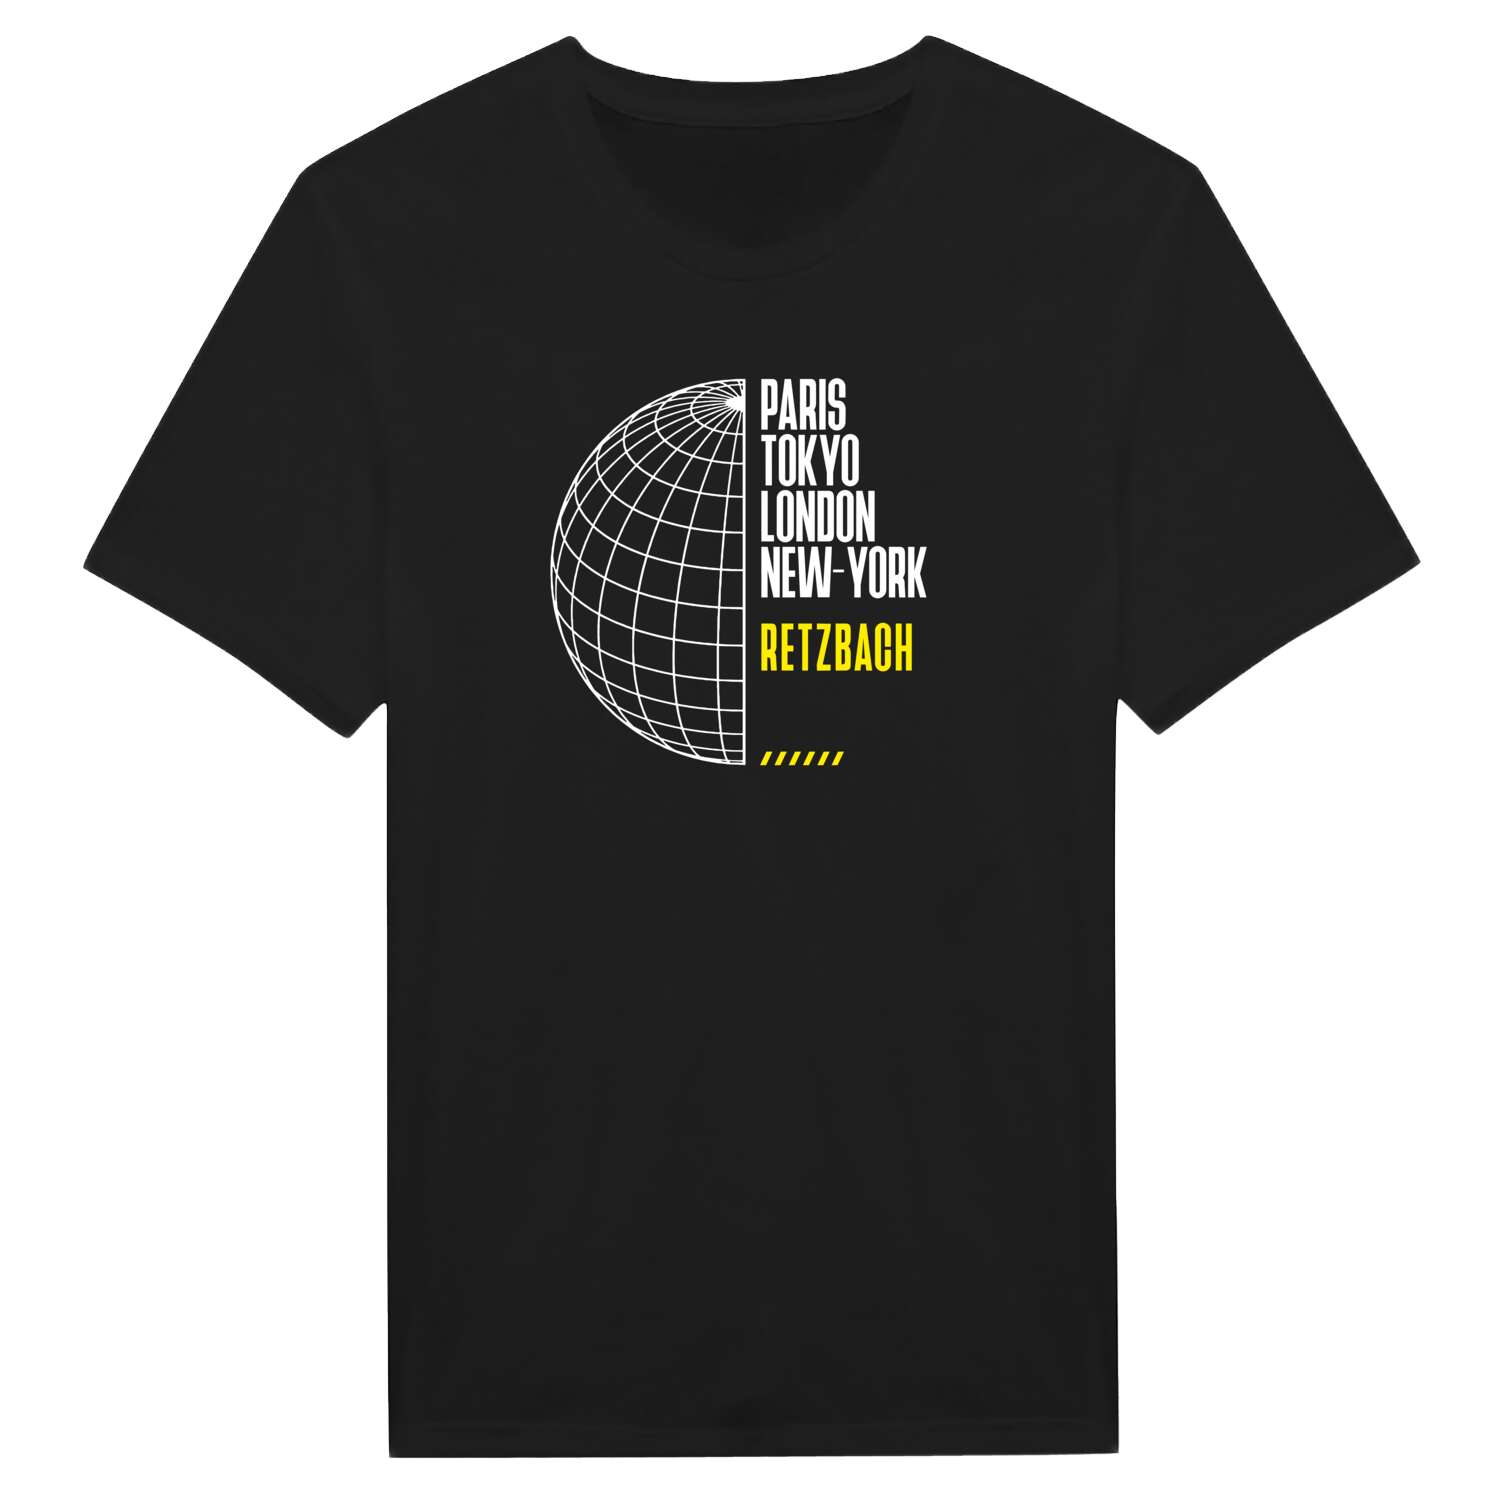 Retzbach T-Shirt »Paris Tokyo London«